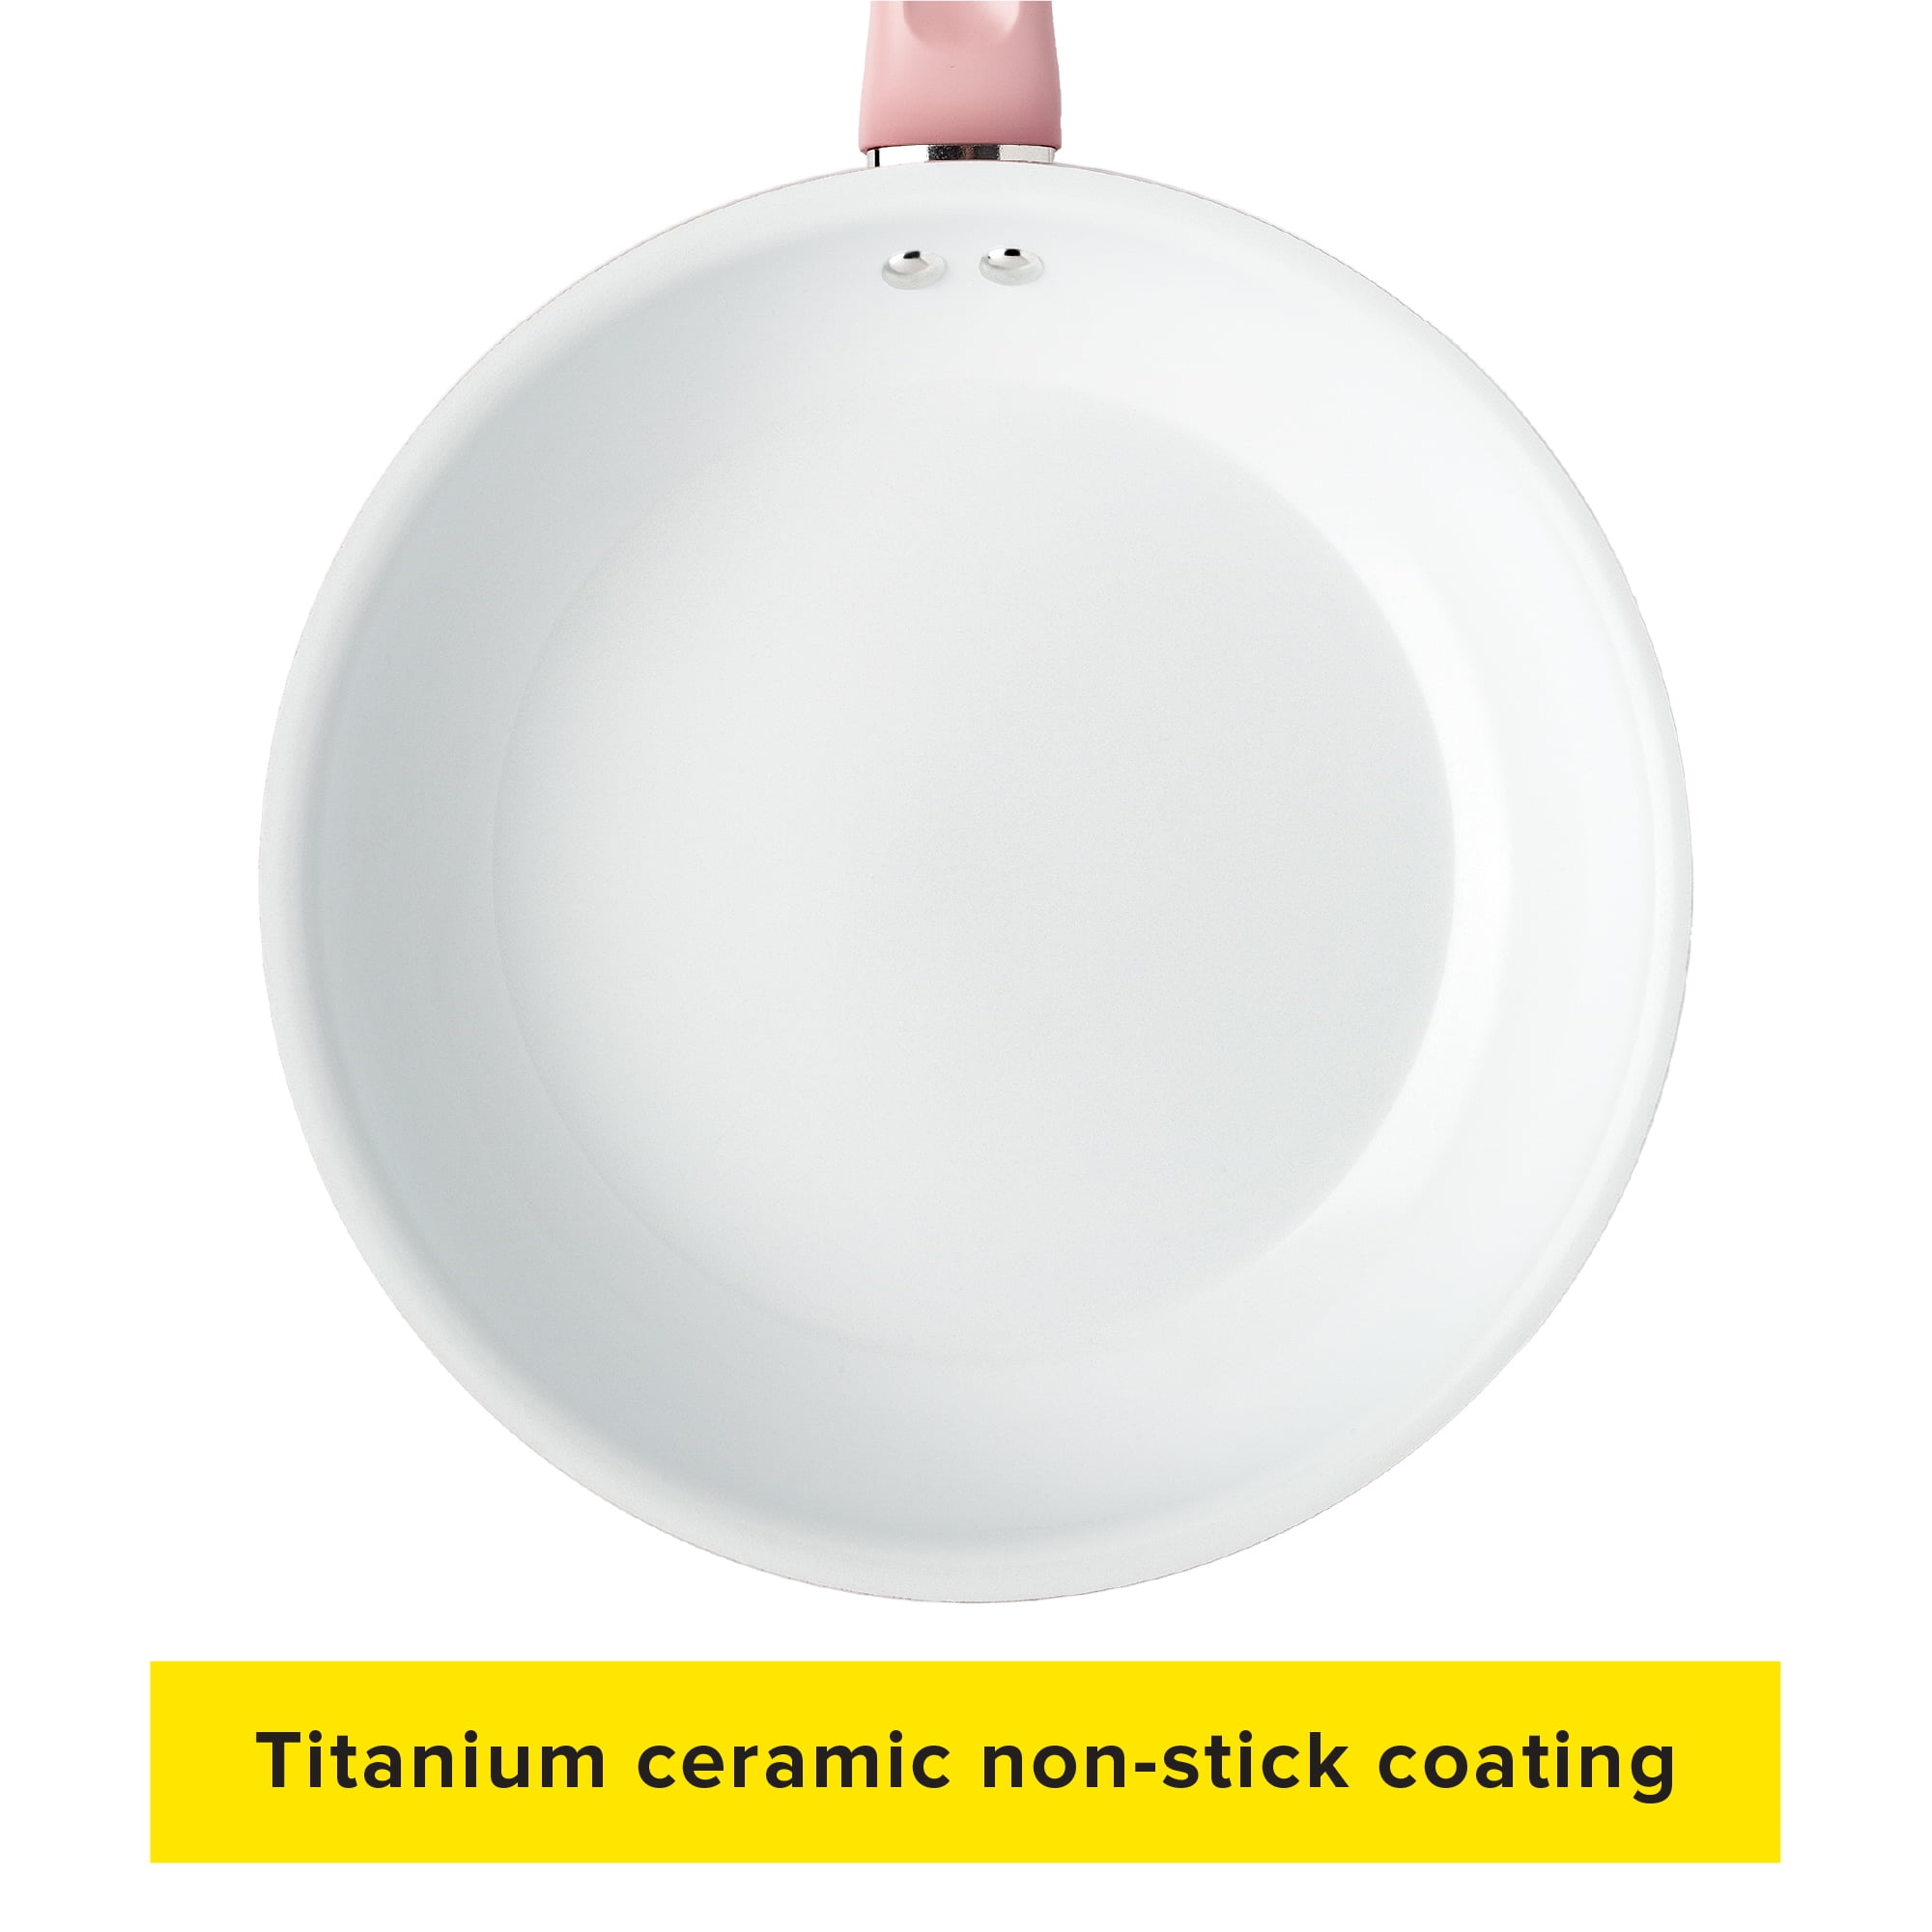 Tasty Ceramic Titanium-Reinforced Cookware Set, Ombre Green, 16 Piece 